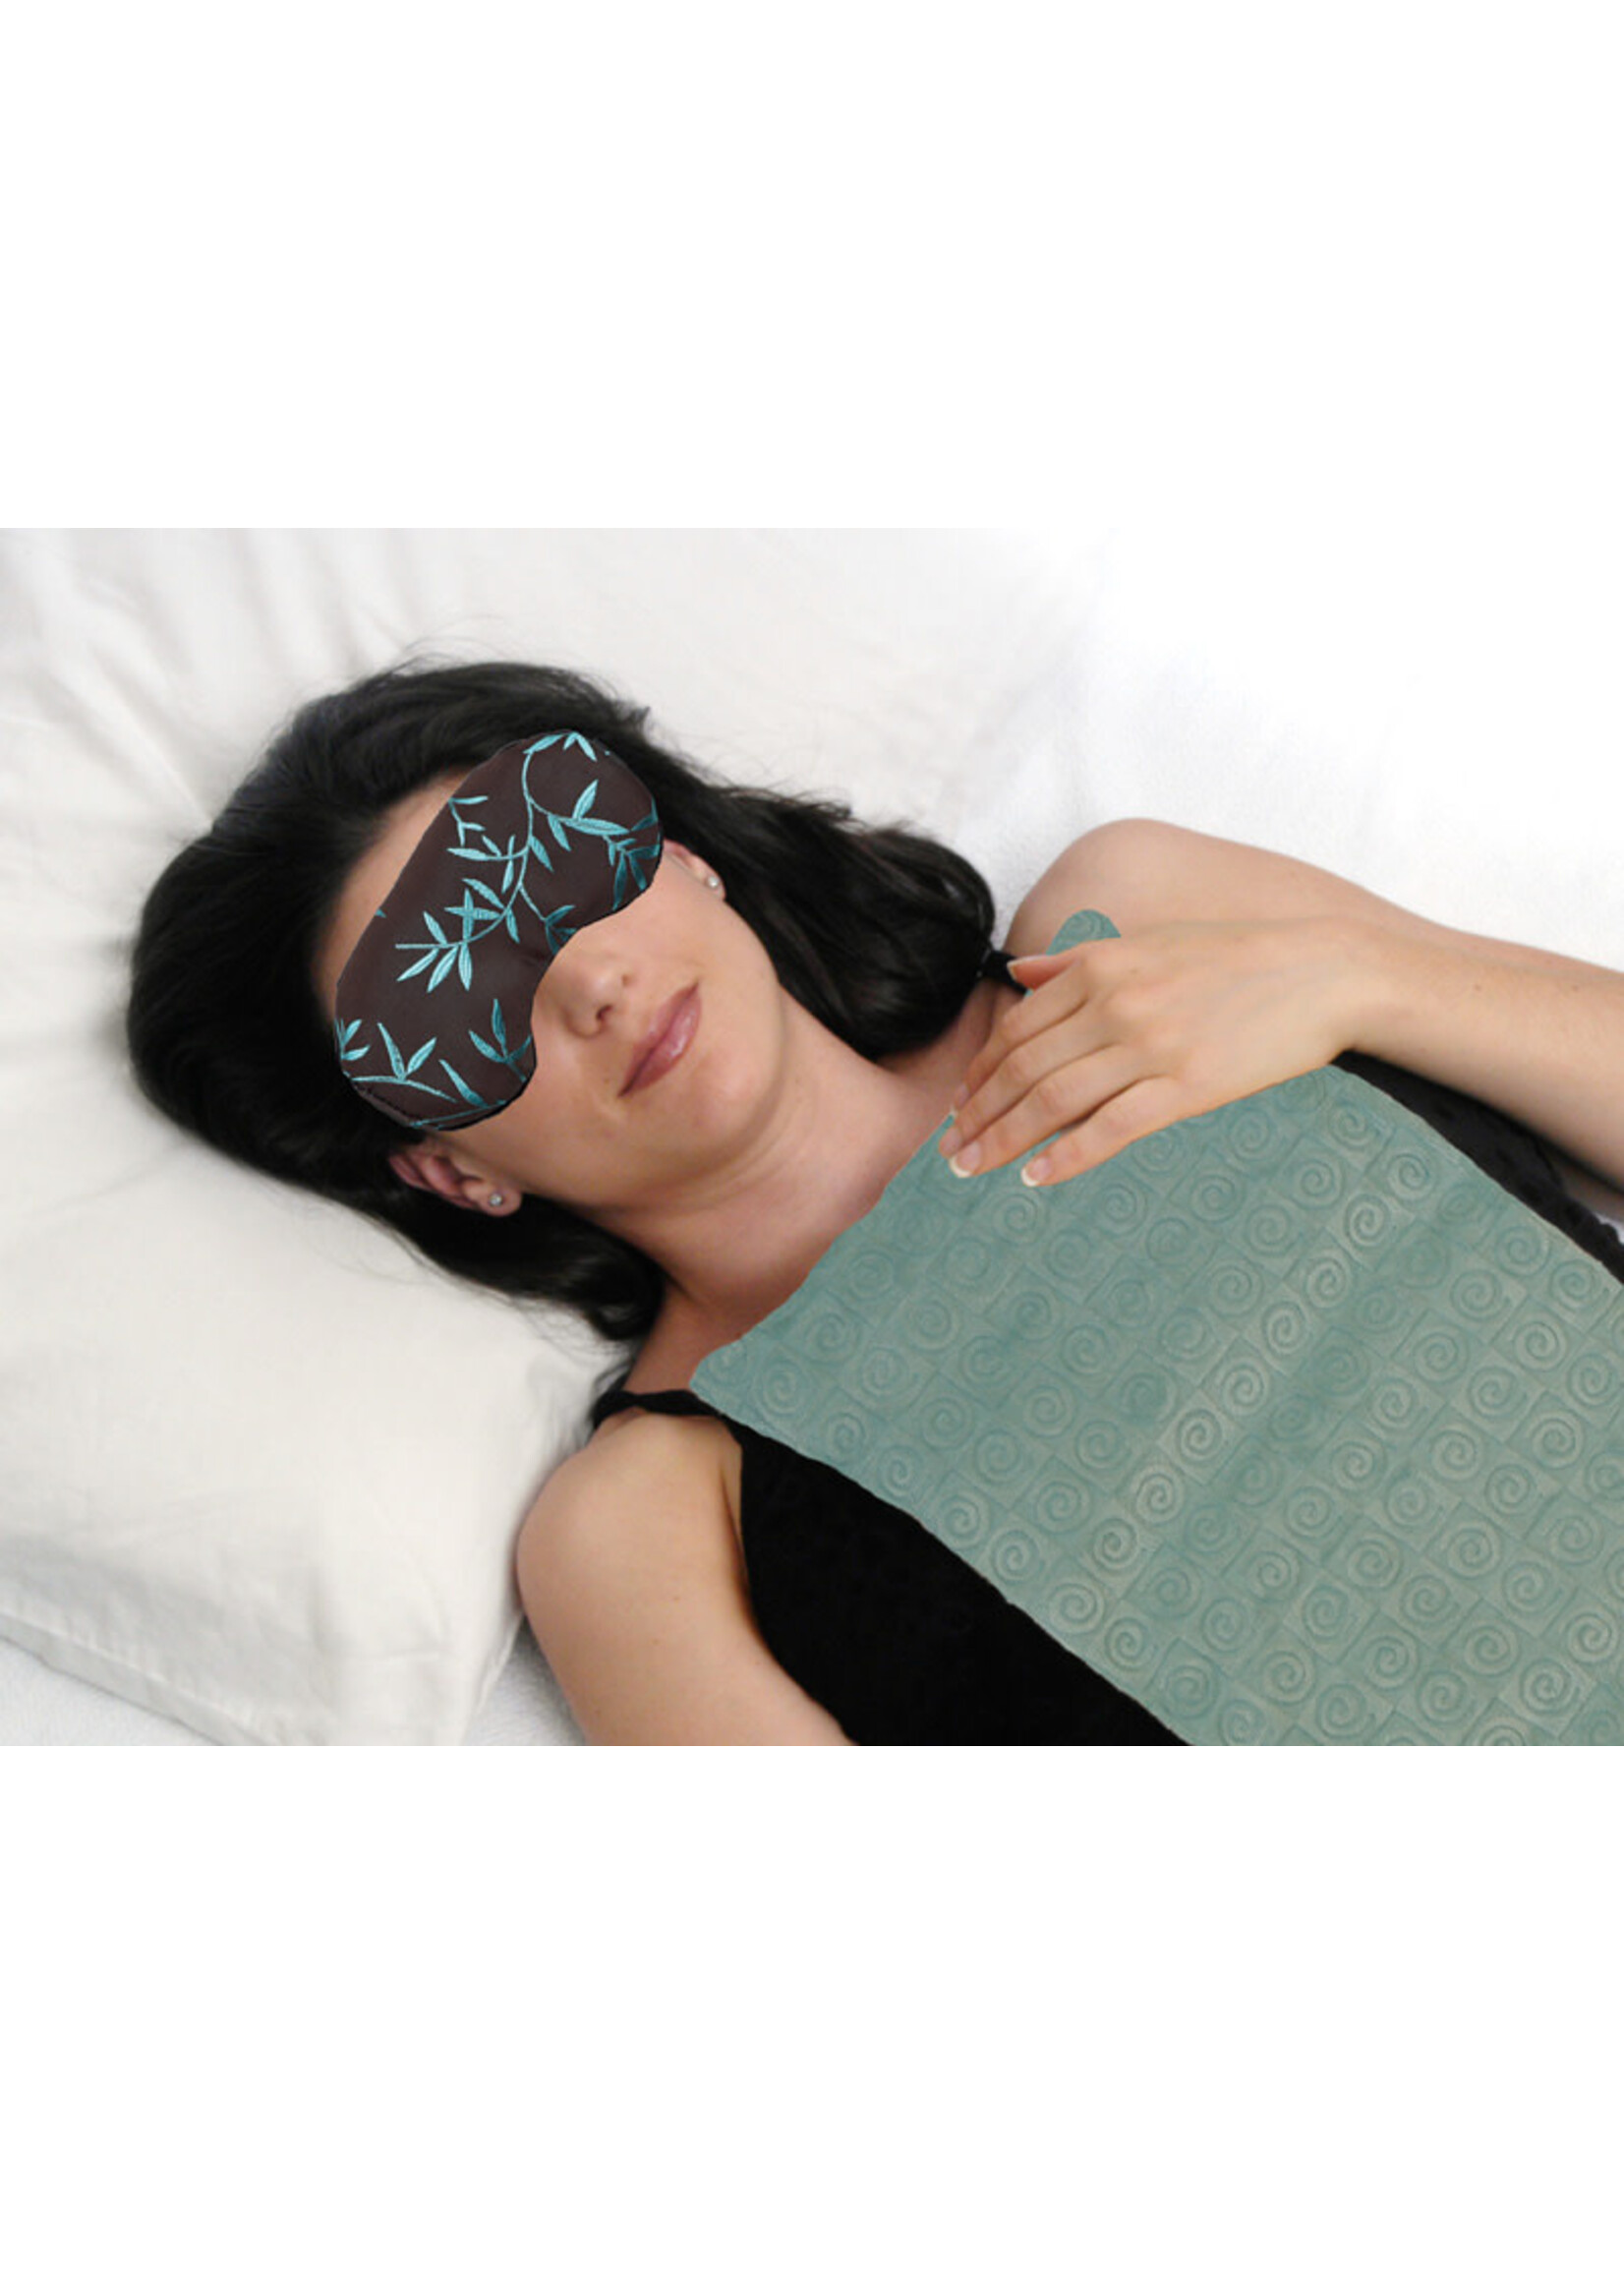 Warm Buddy Aromatherapy Eye Pillow